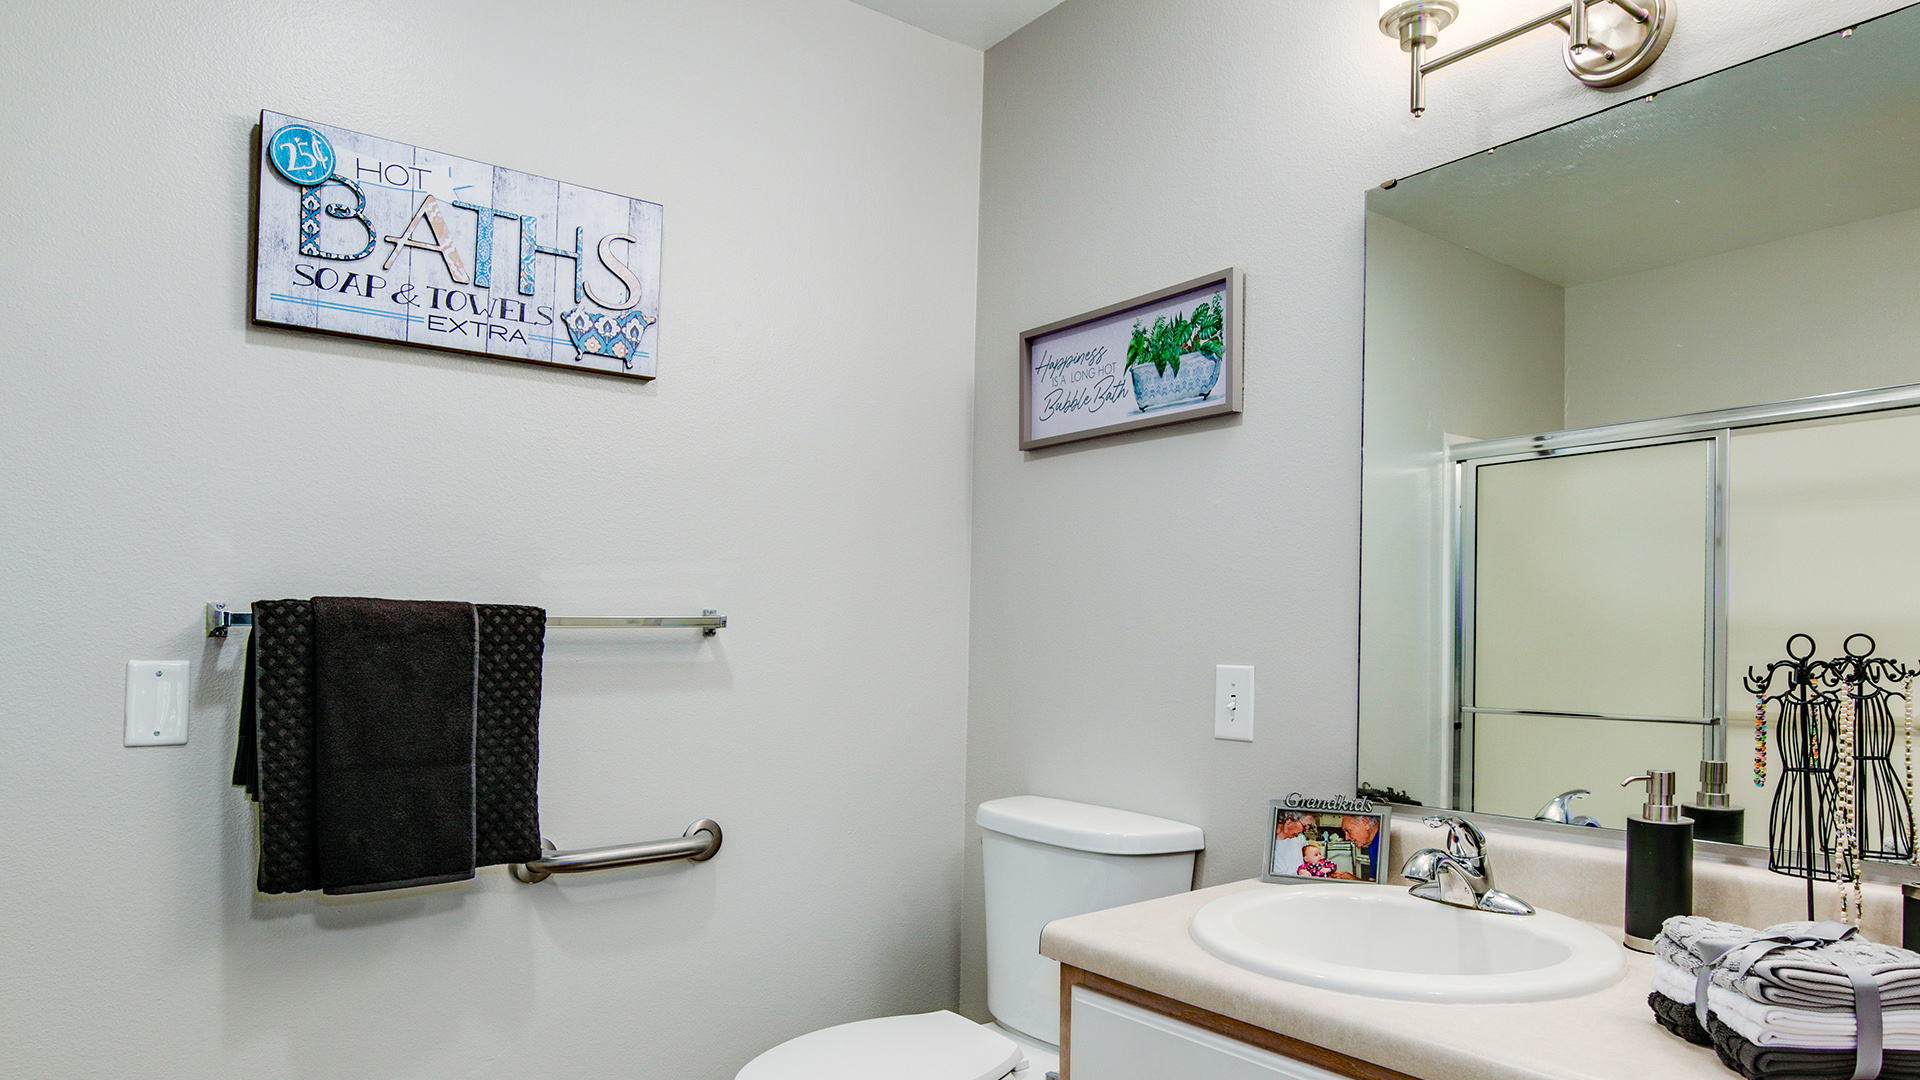 Holiday Cowhorn Creek Estates apartment bath